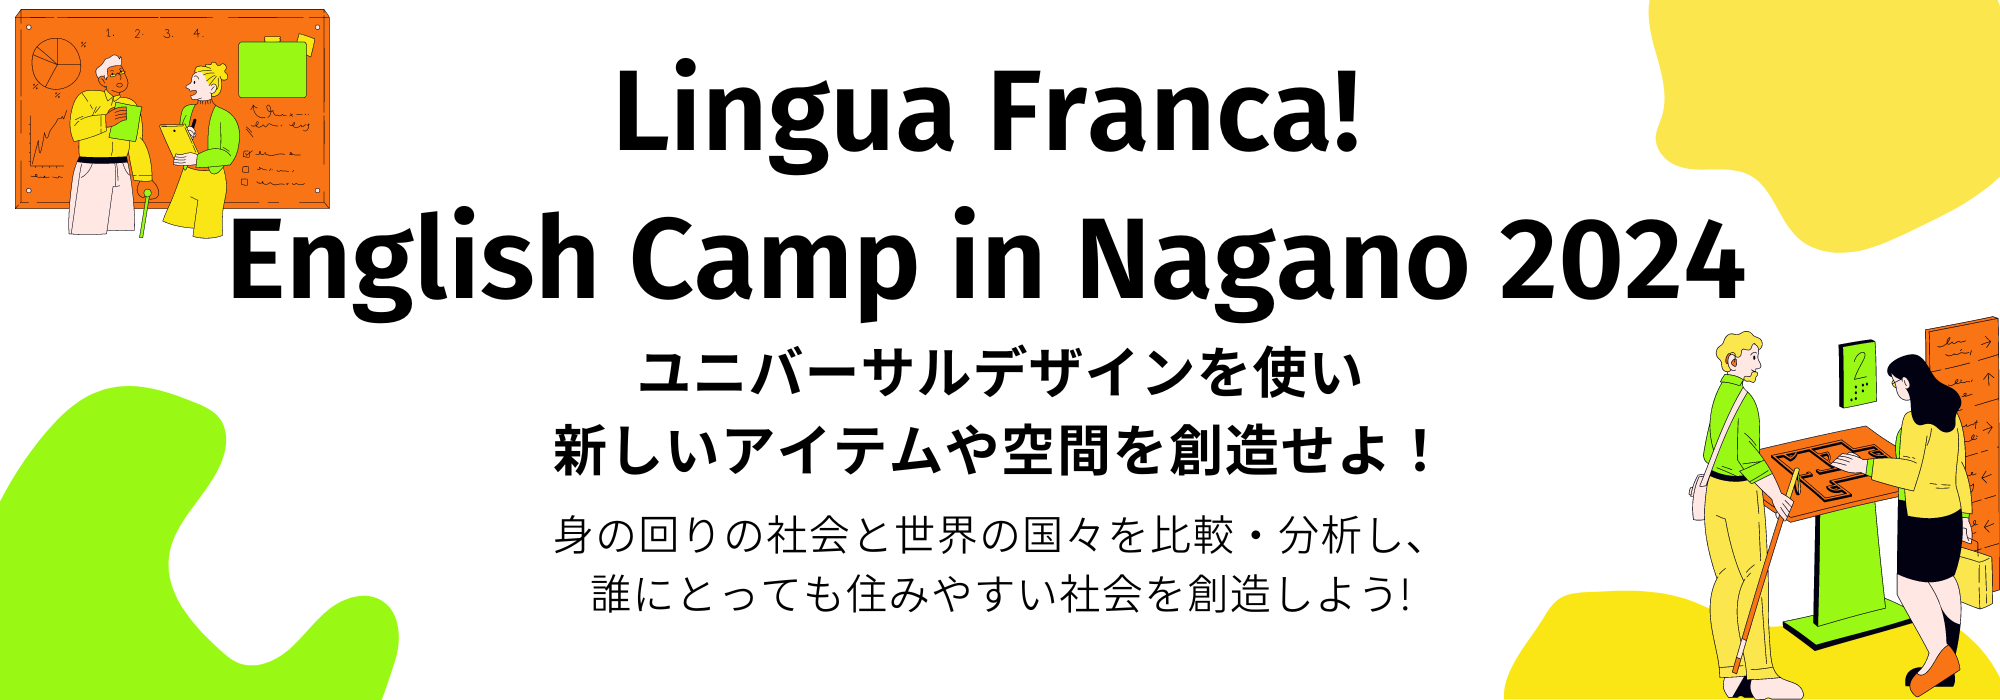 Lingua Franca!  English Camp in Nagano 2024 ユニバーサルデザインを使い 新しいアイテムや空間を創造せよ！ 身の回りの社会と世界の国々を比較・分析し、 誰にとっても住みやすい社会を創造しよう!